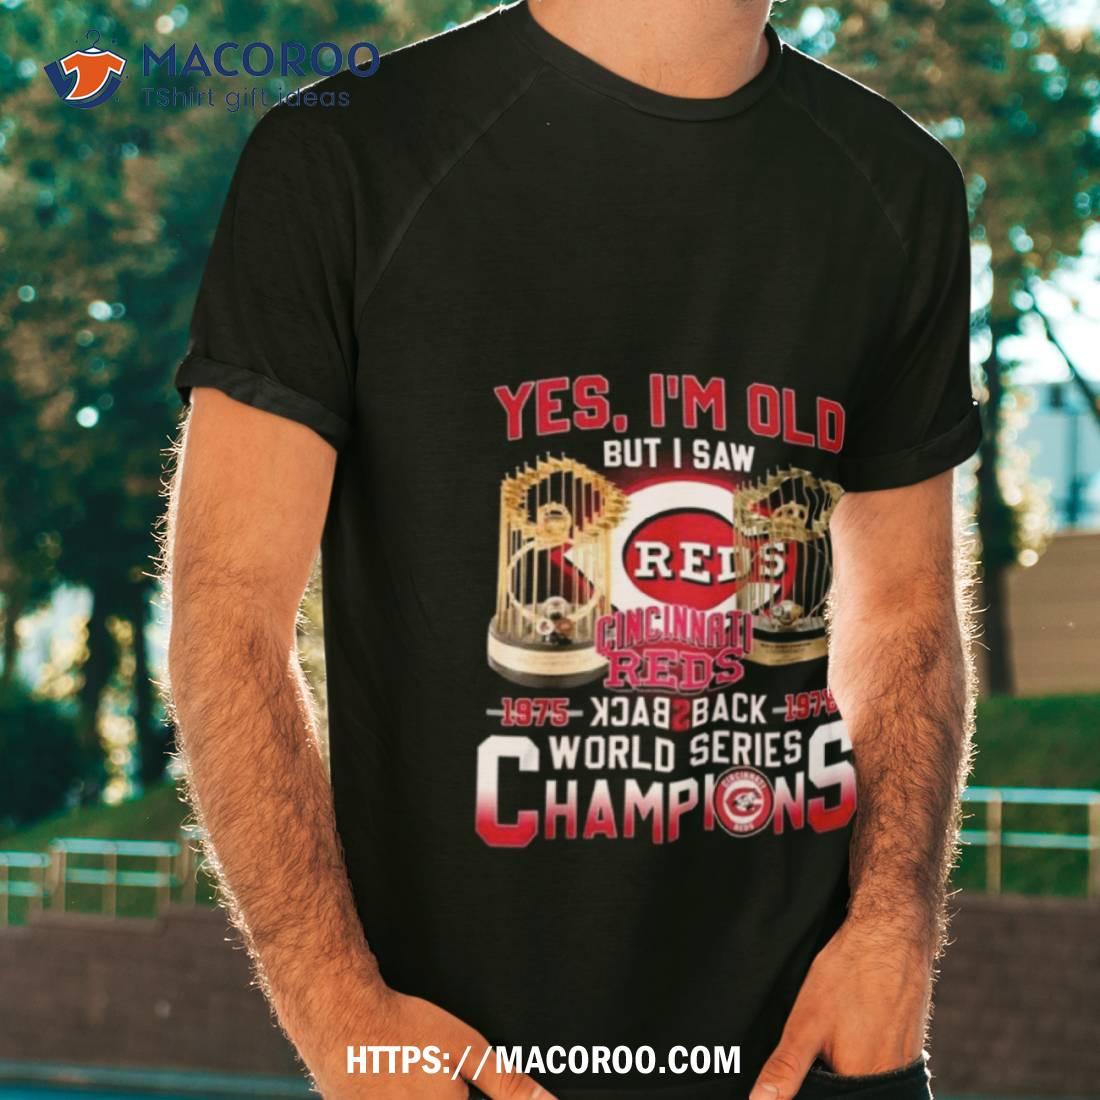 Custom Cincinnati Reds Youth Red Backer T-Shirt 